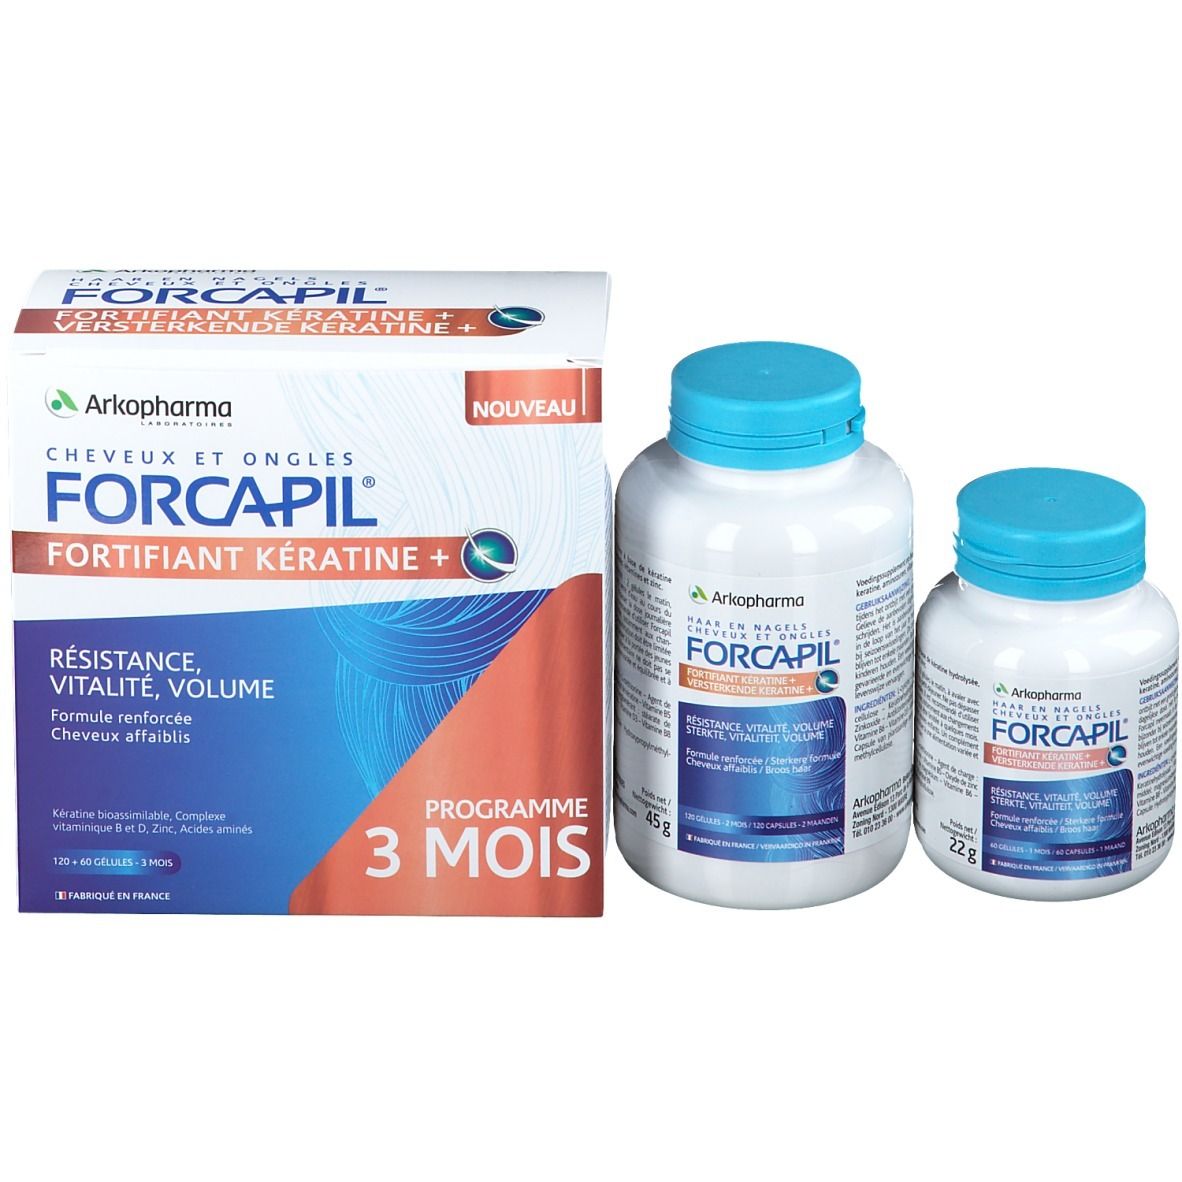 Arkopharma Forcapil® Kératine +